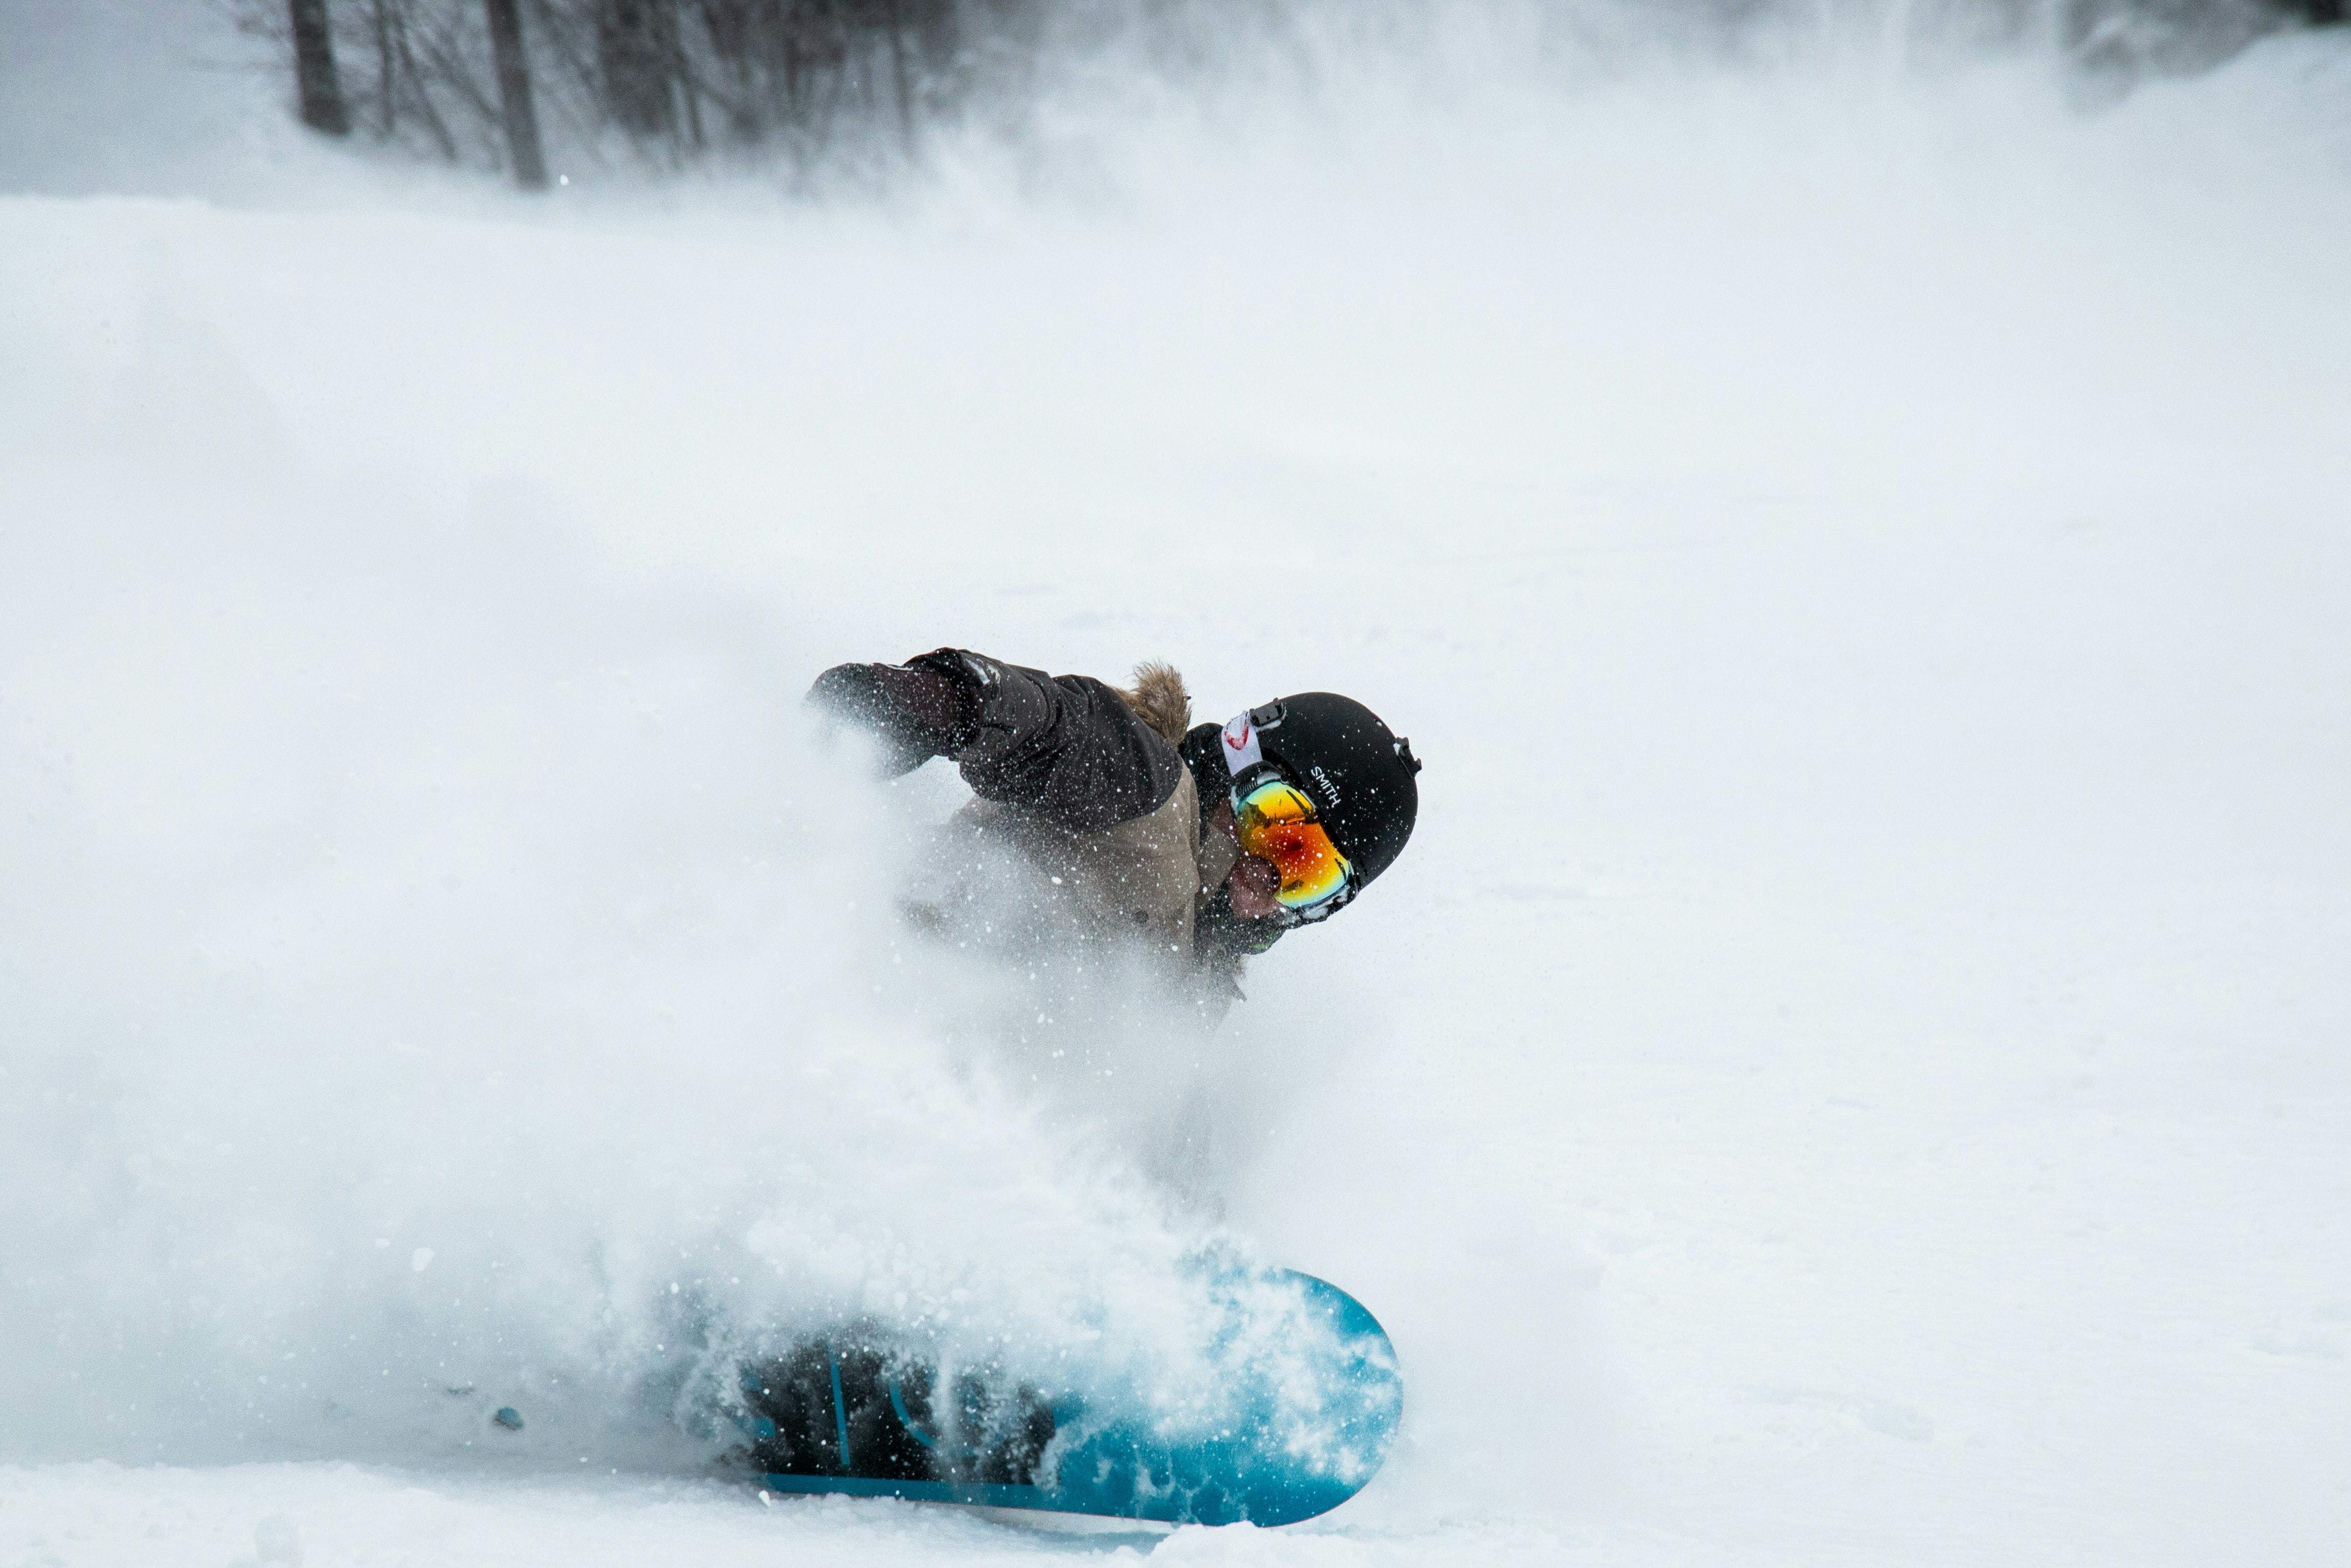 A snowboarder turns through deep powder.